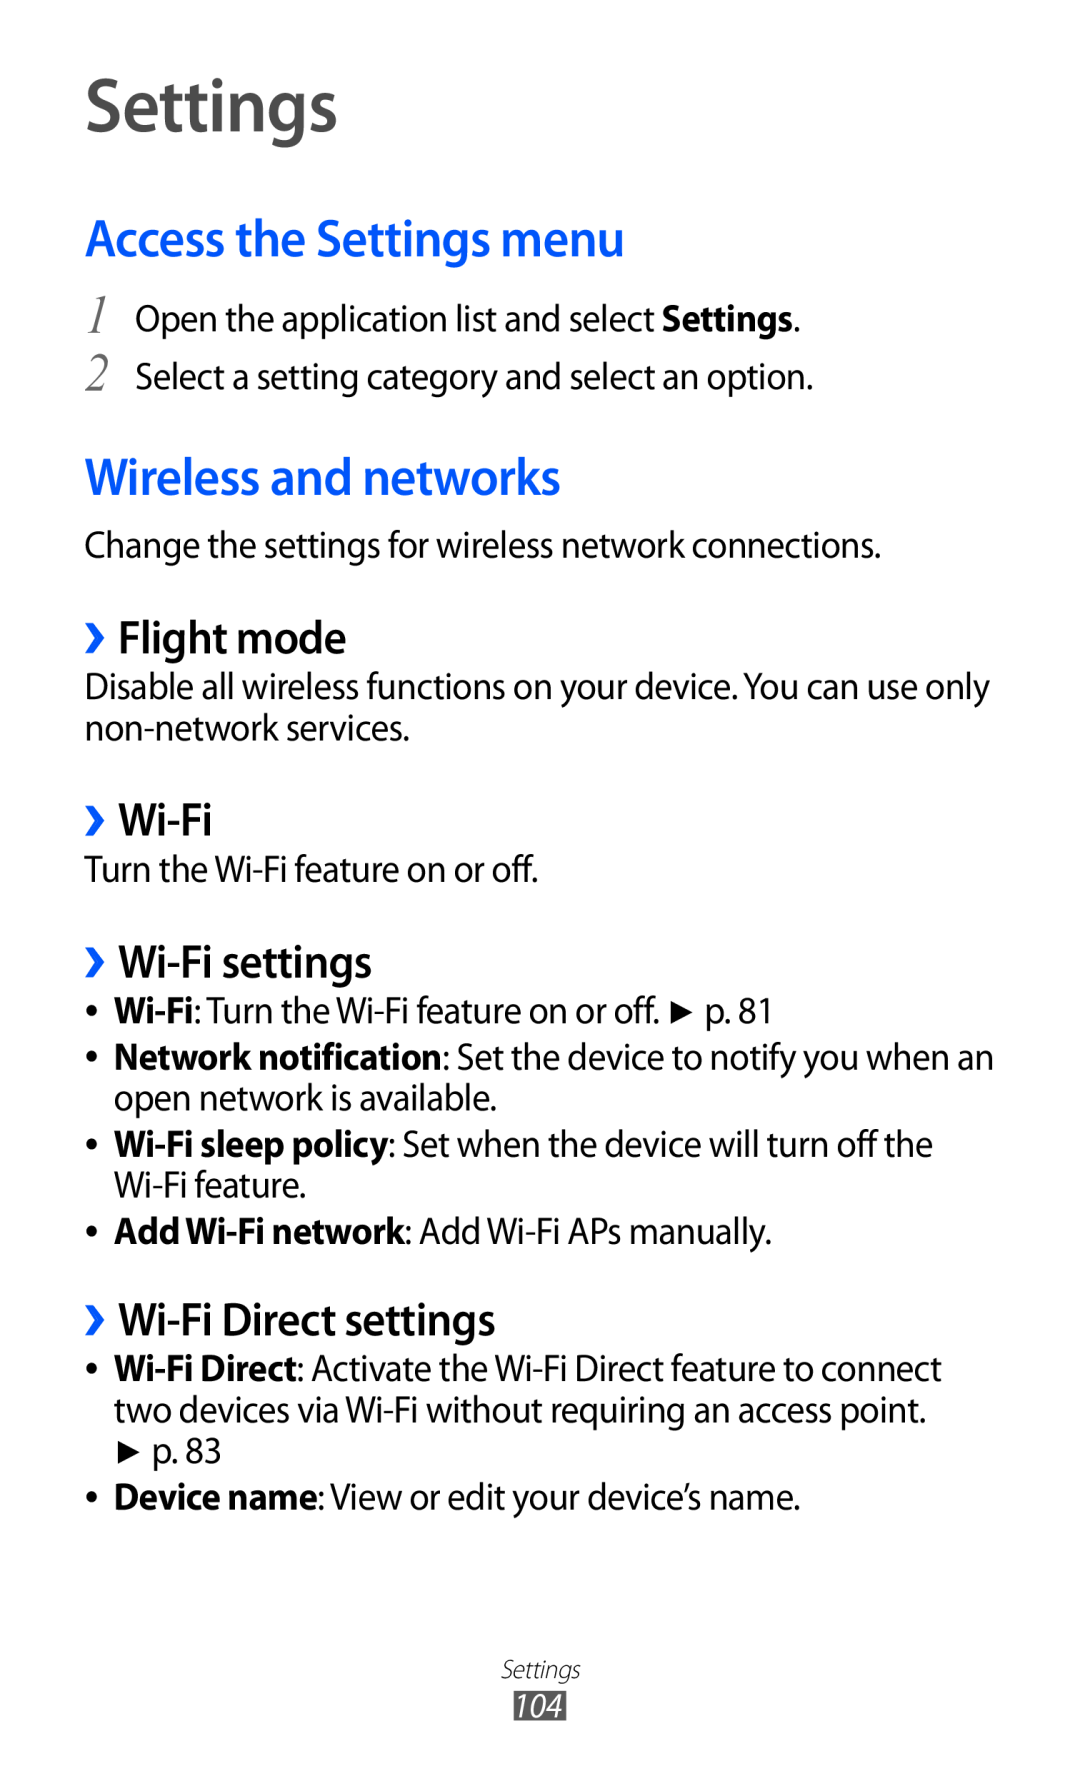 Samsung GT-P7320FKAOMN manual Access the Settings menu, Wireless and networks, ››Flight mode, ››Wi-Fi settings 